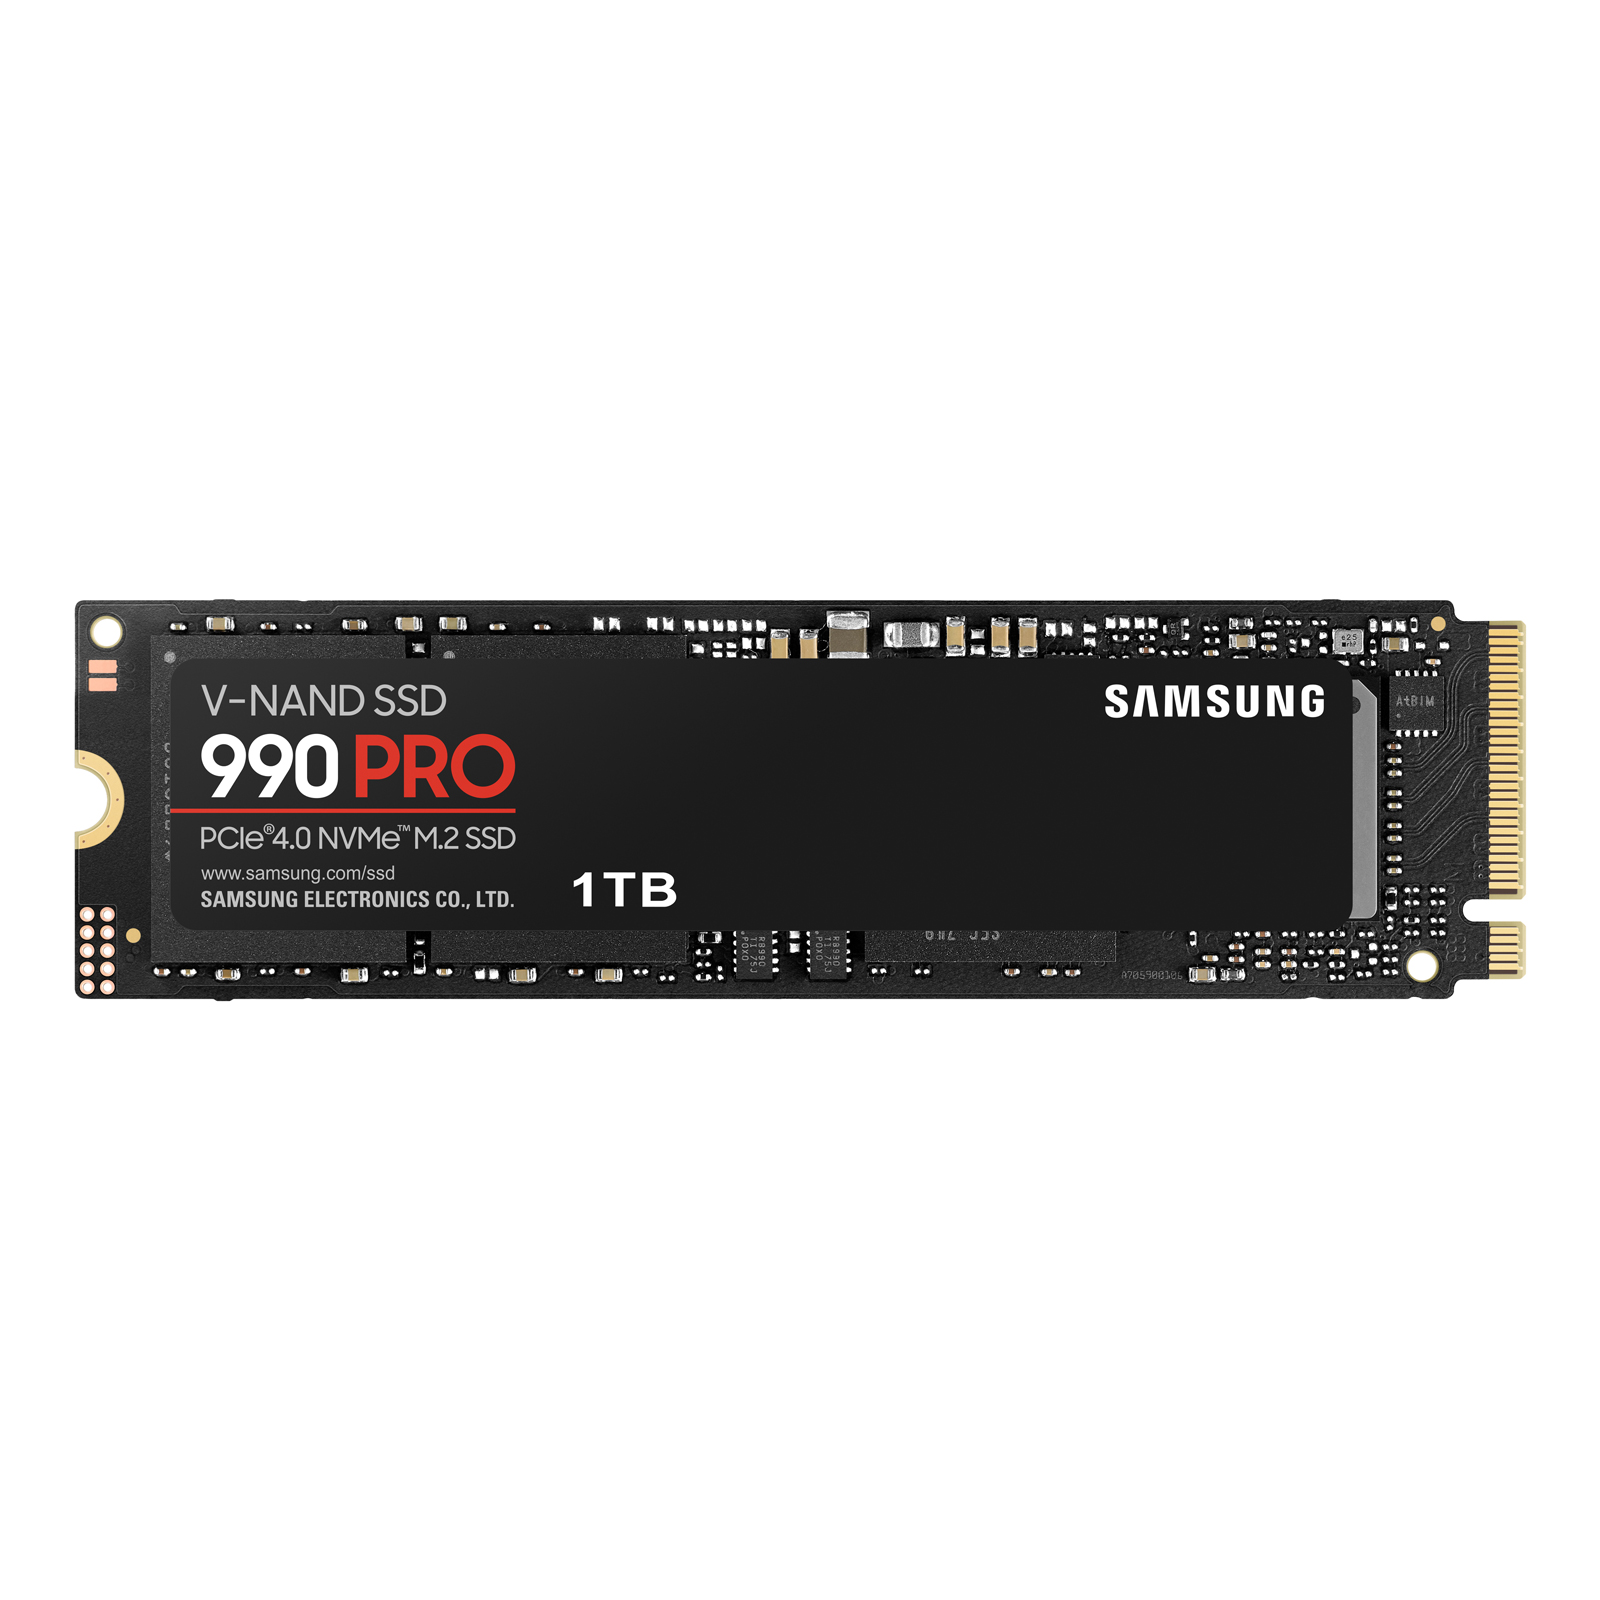 Samsung NVMe M.2 SSD 990 PRO (1TB) | ITGマーケティング - Samsung